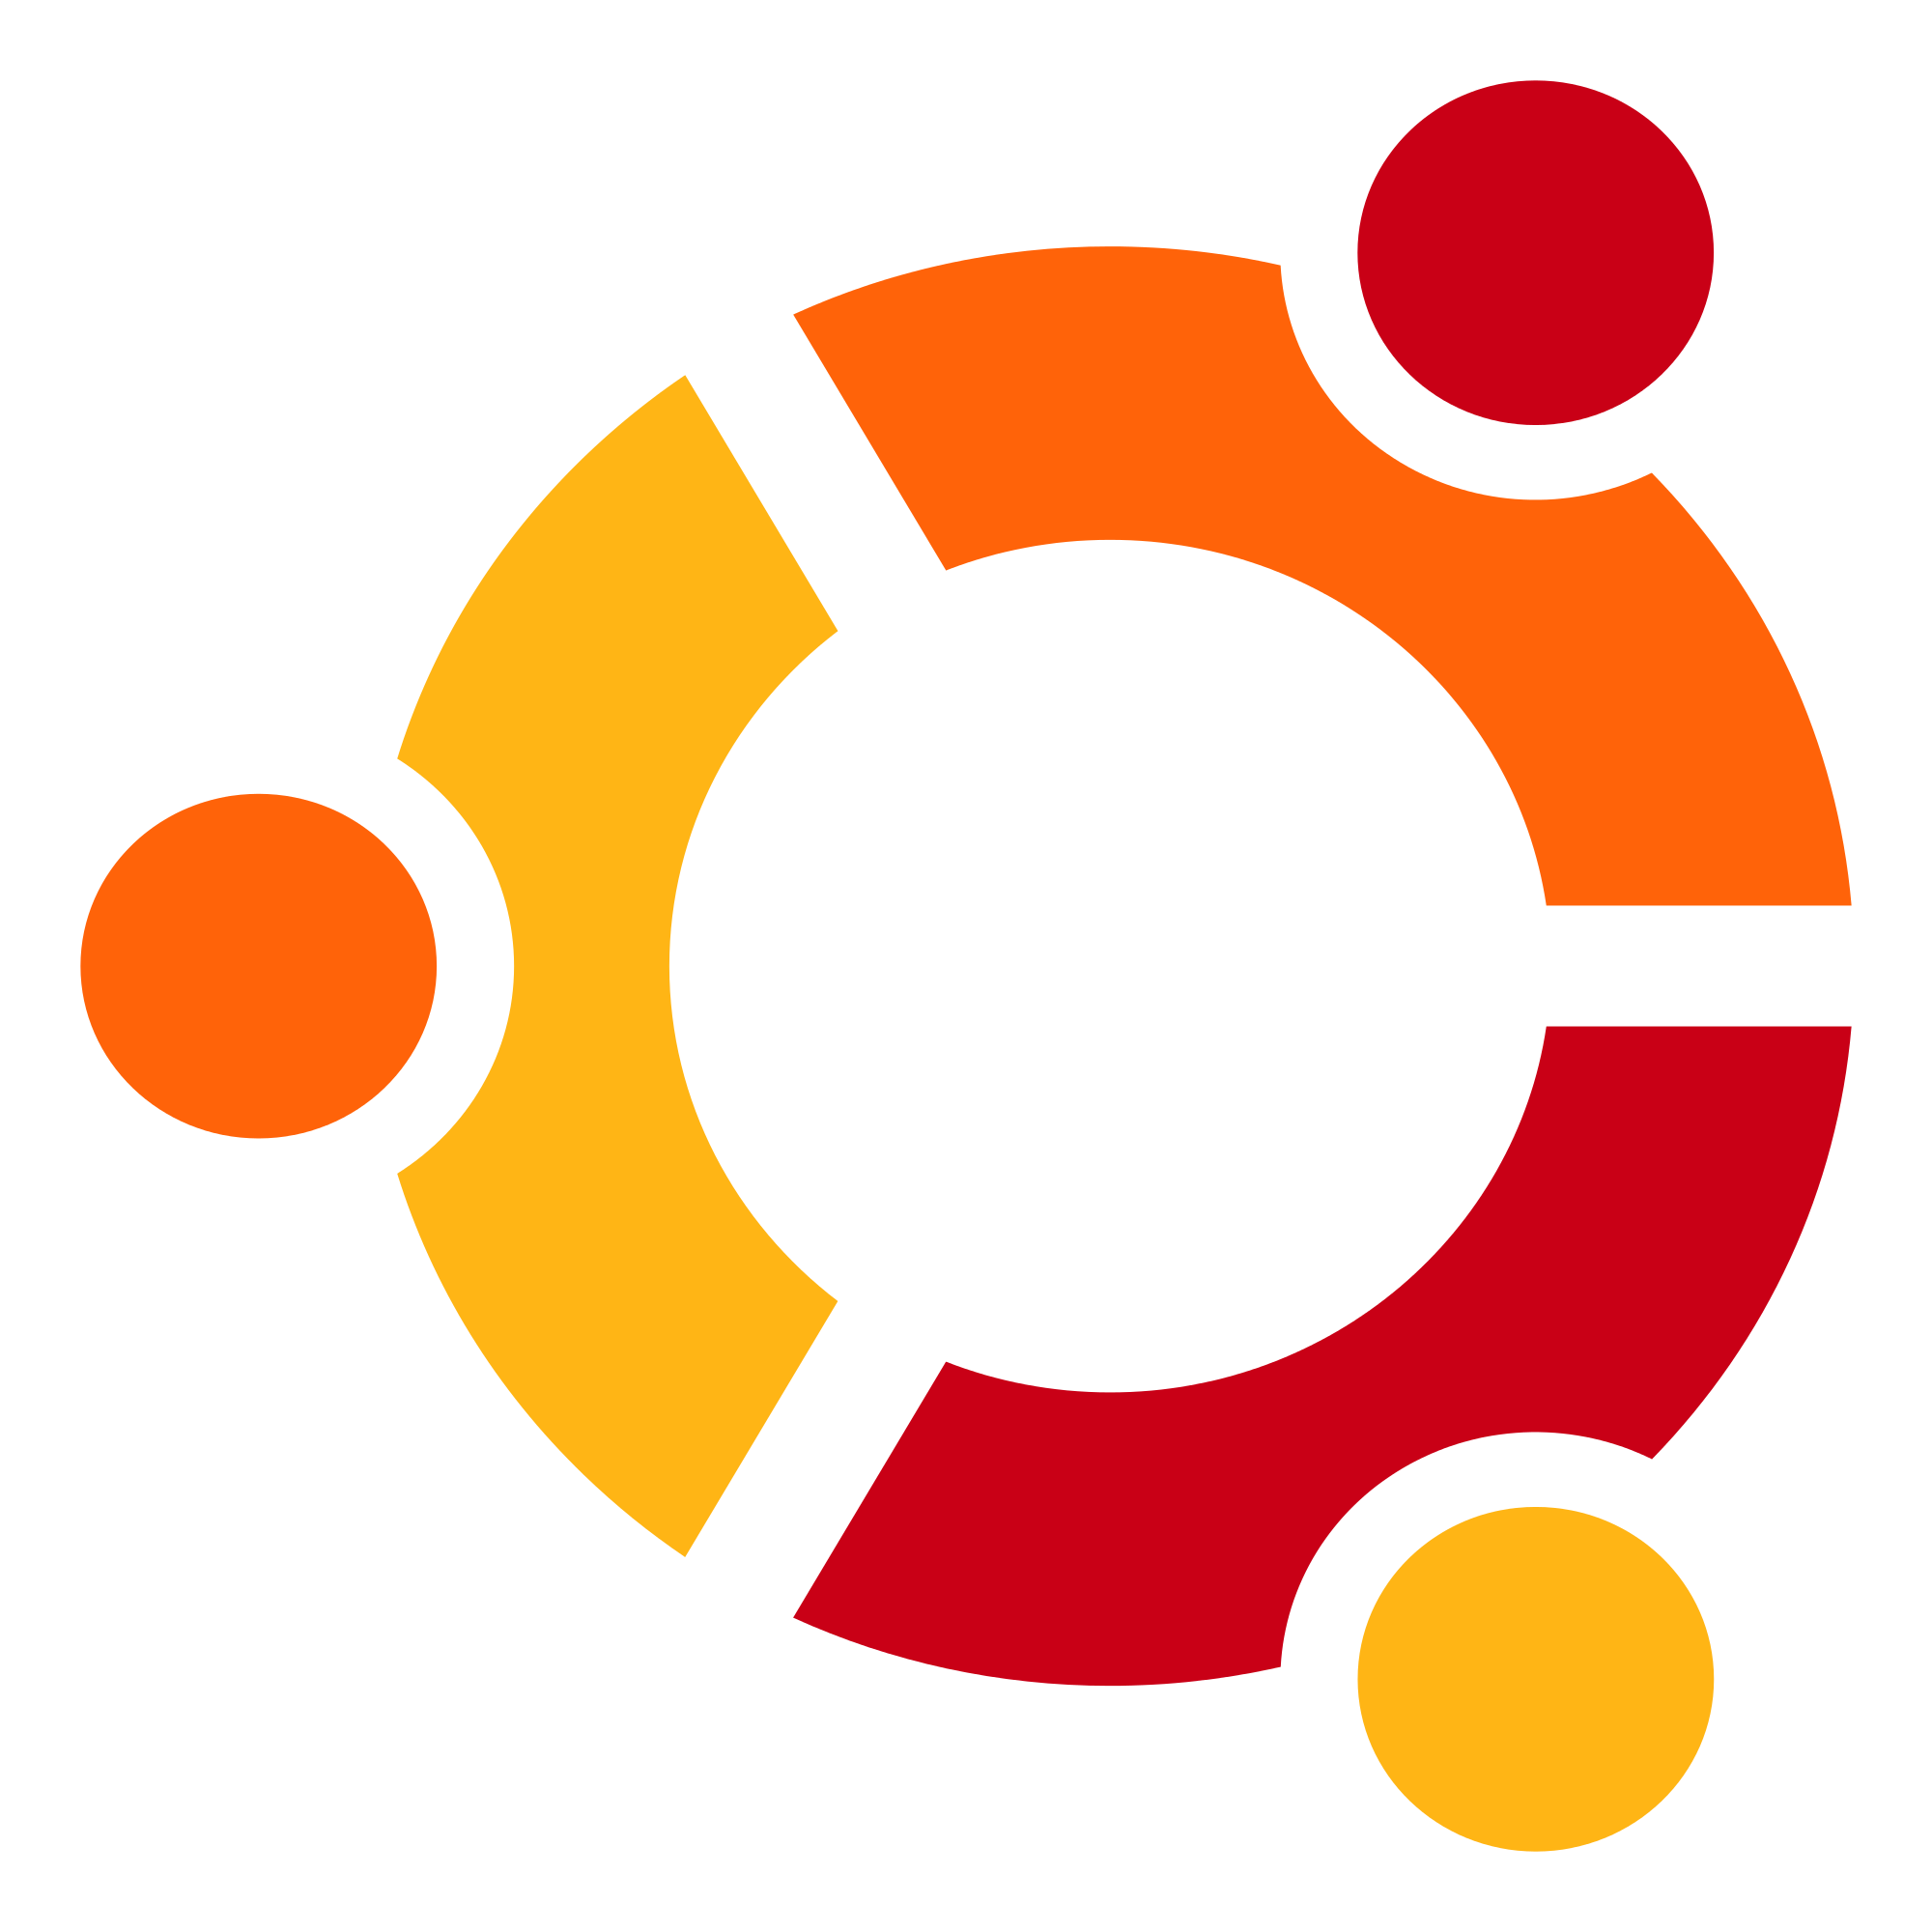 ../../../_images/ubuntu-logo.png